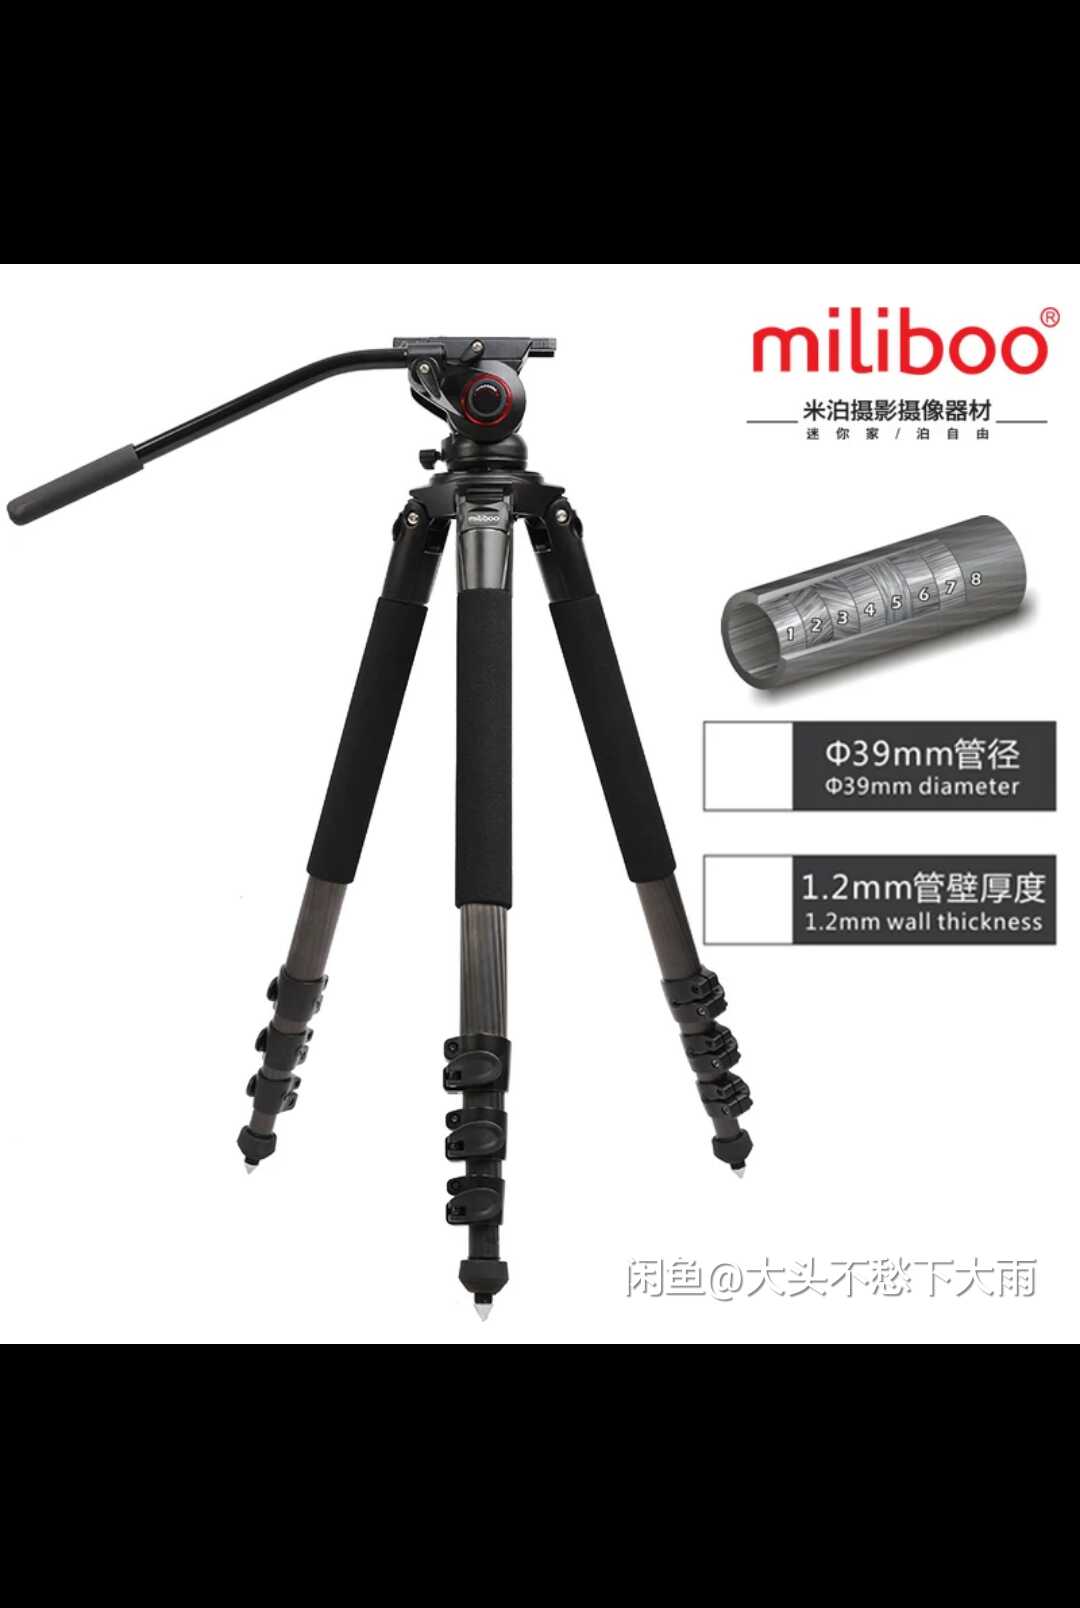 miliboo铁塔MTT702B专业摄像碳纤维大脚架